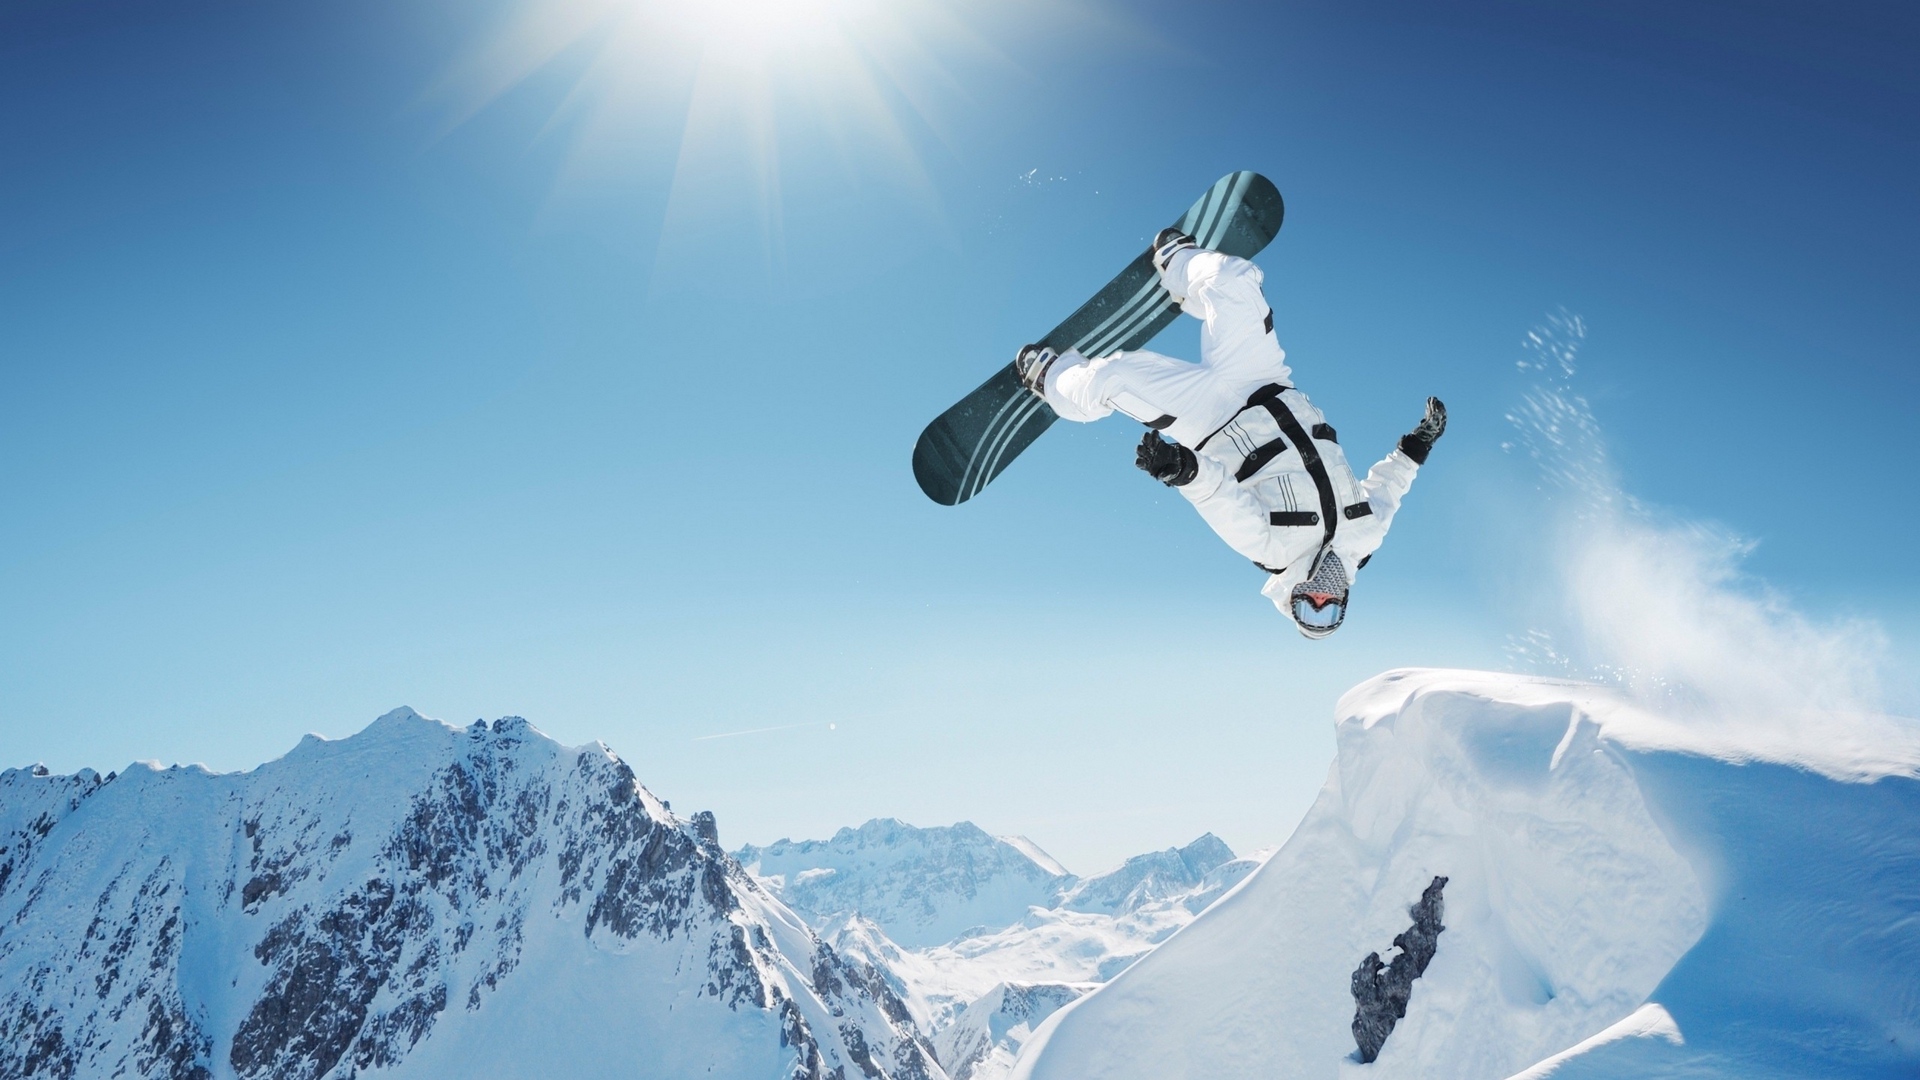 download wallpaper: snowboard salto wallpaper